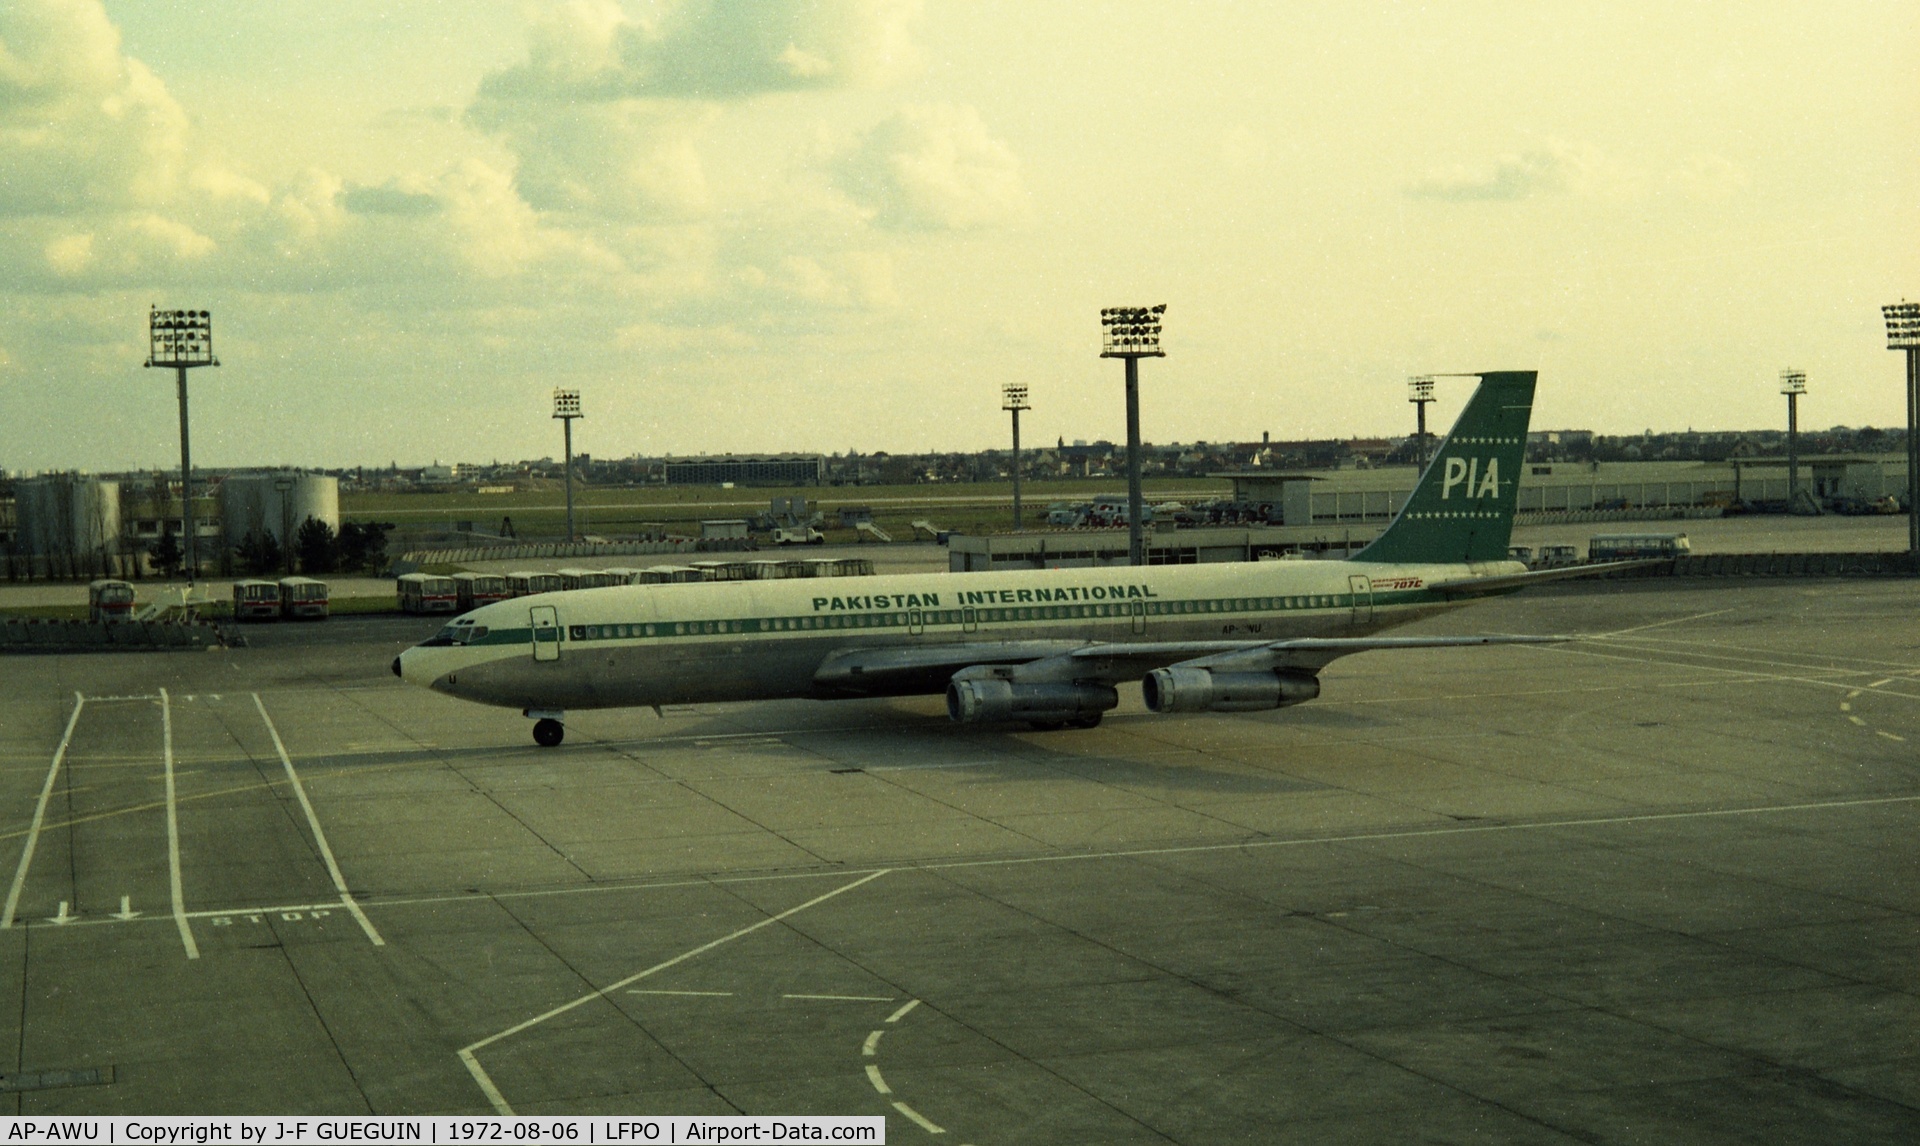 AP-AWU, 1965 Boeing 707-373C C/N 18991, AP-AWU taxiing at Paris-Orly airport.